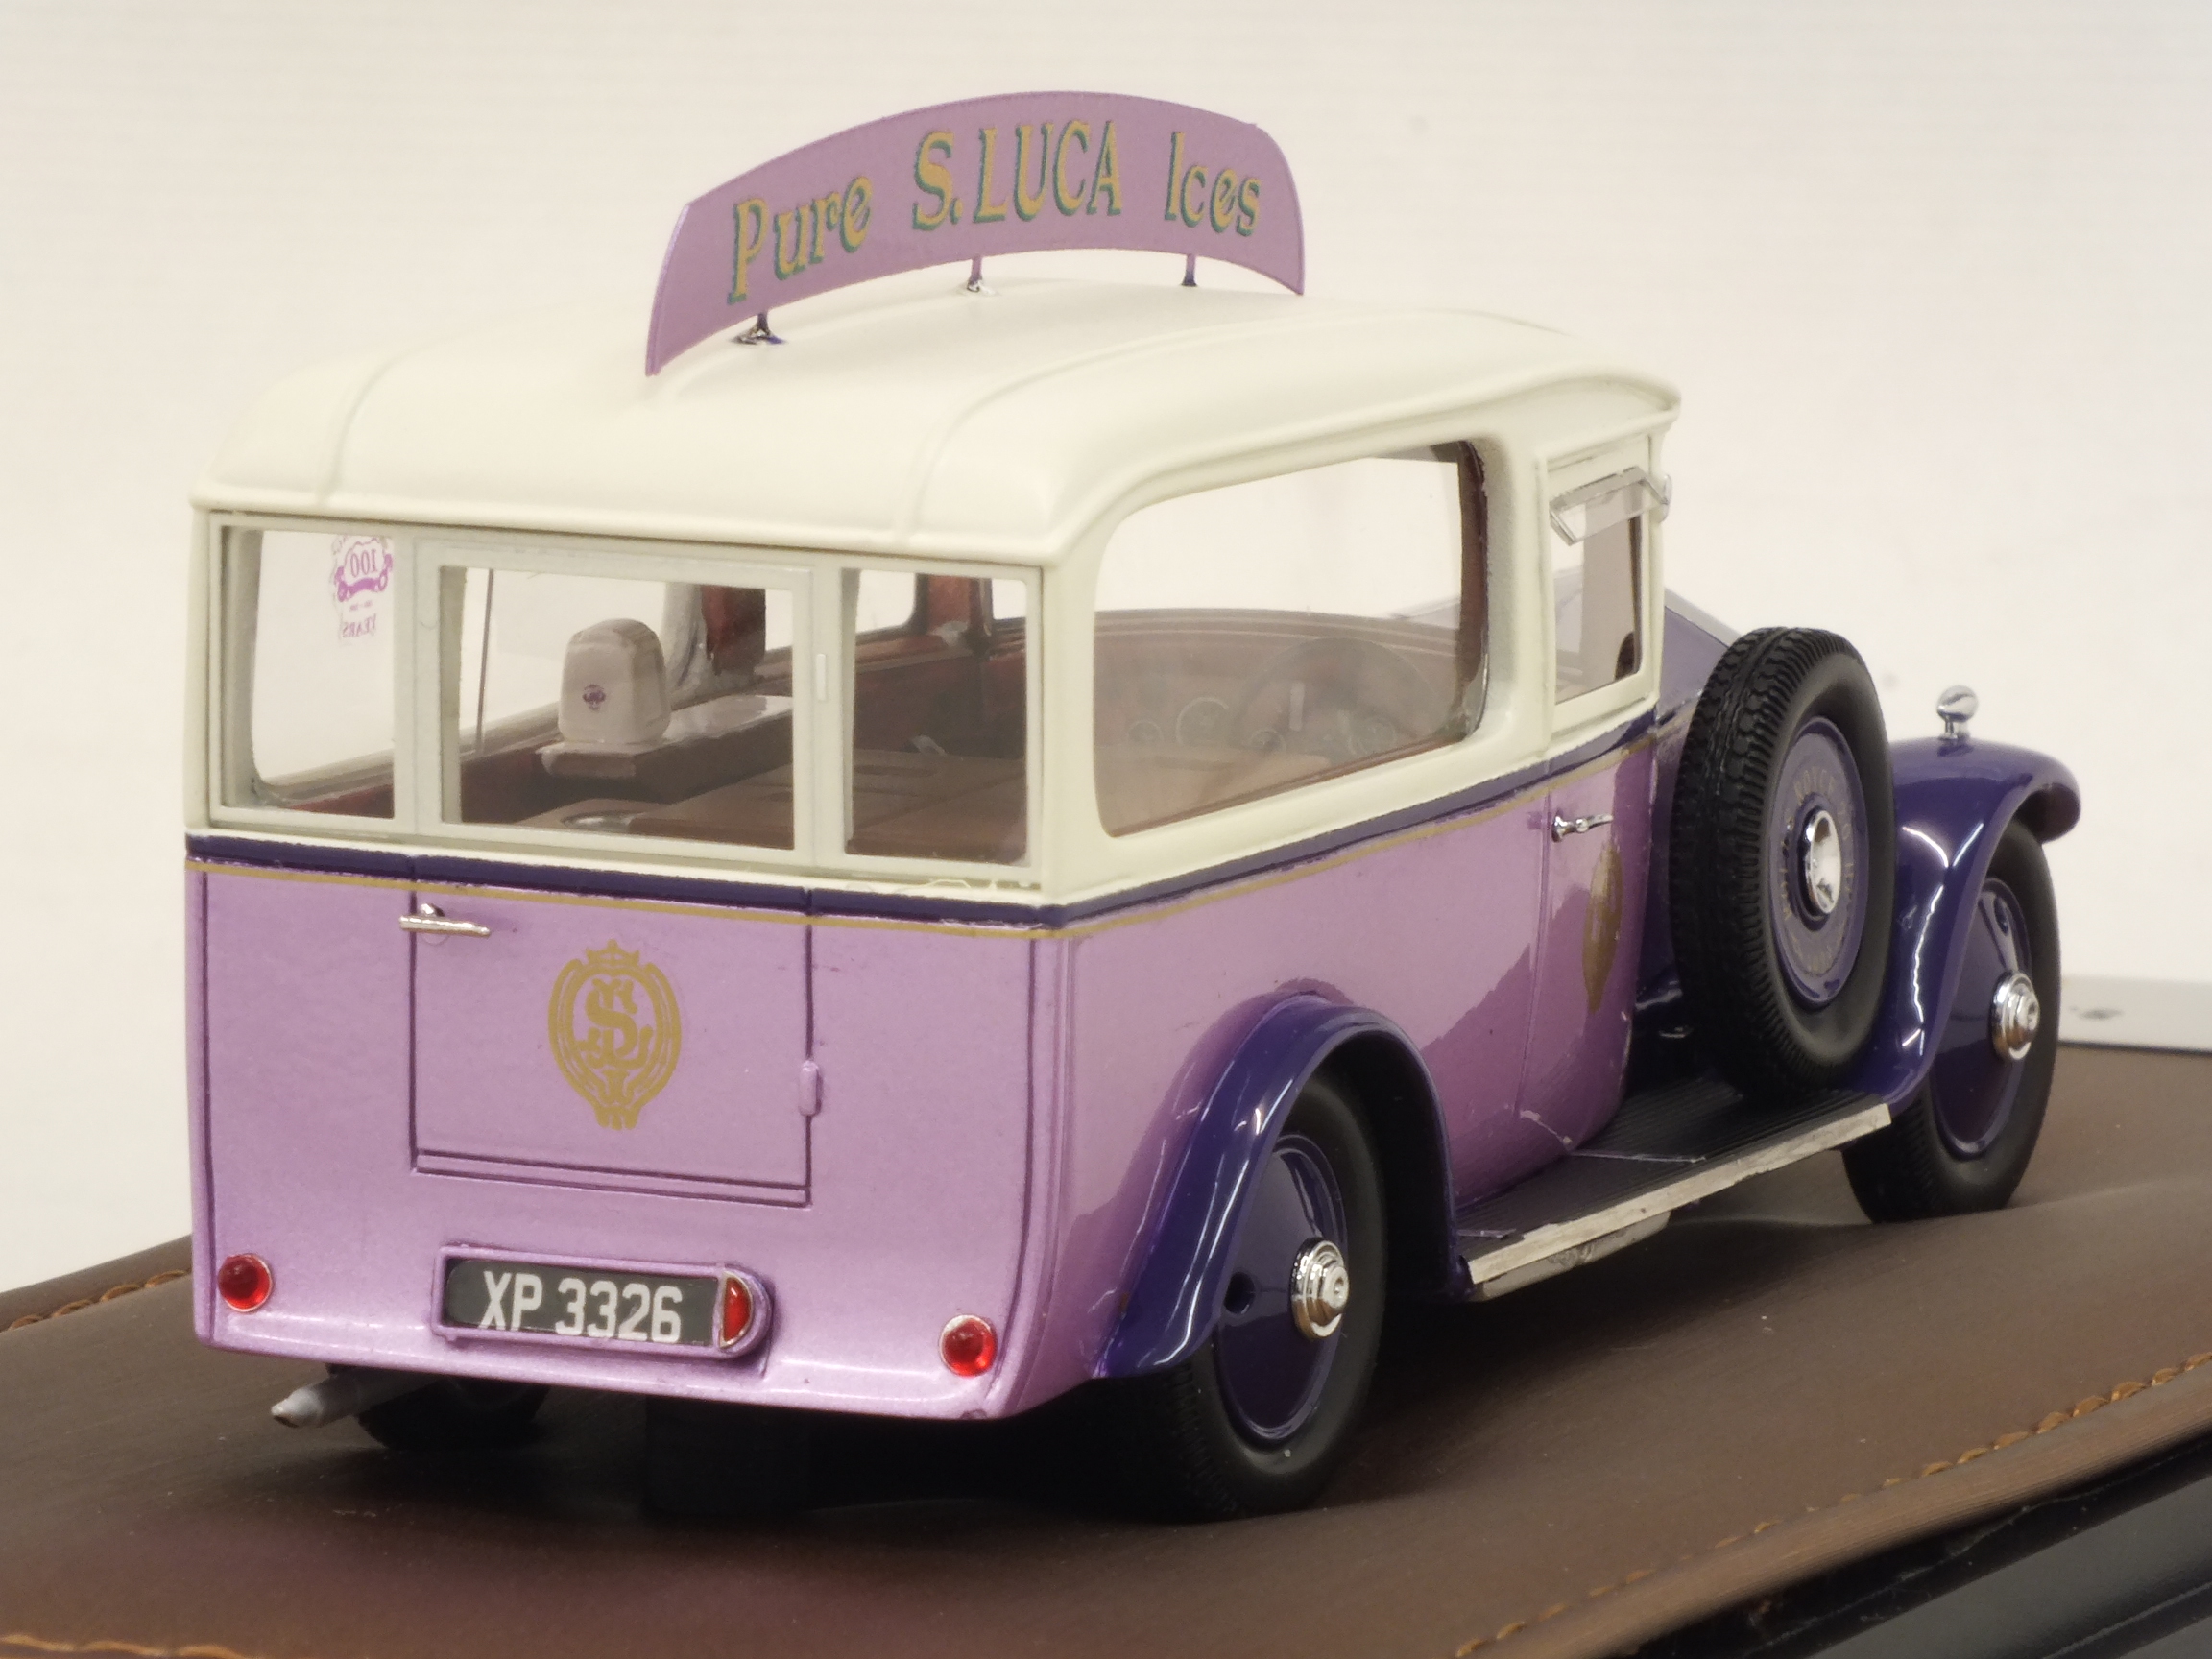 Rolls Royce 20 HP S.Luca Ice Cream Van 1923 - glm-models